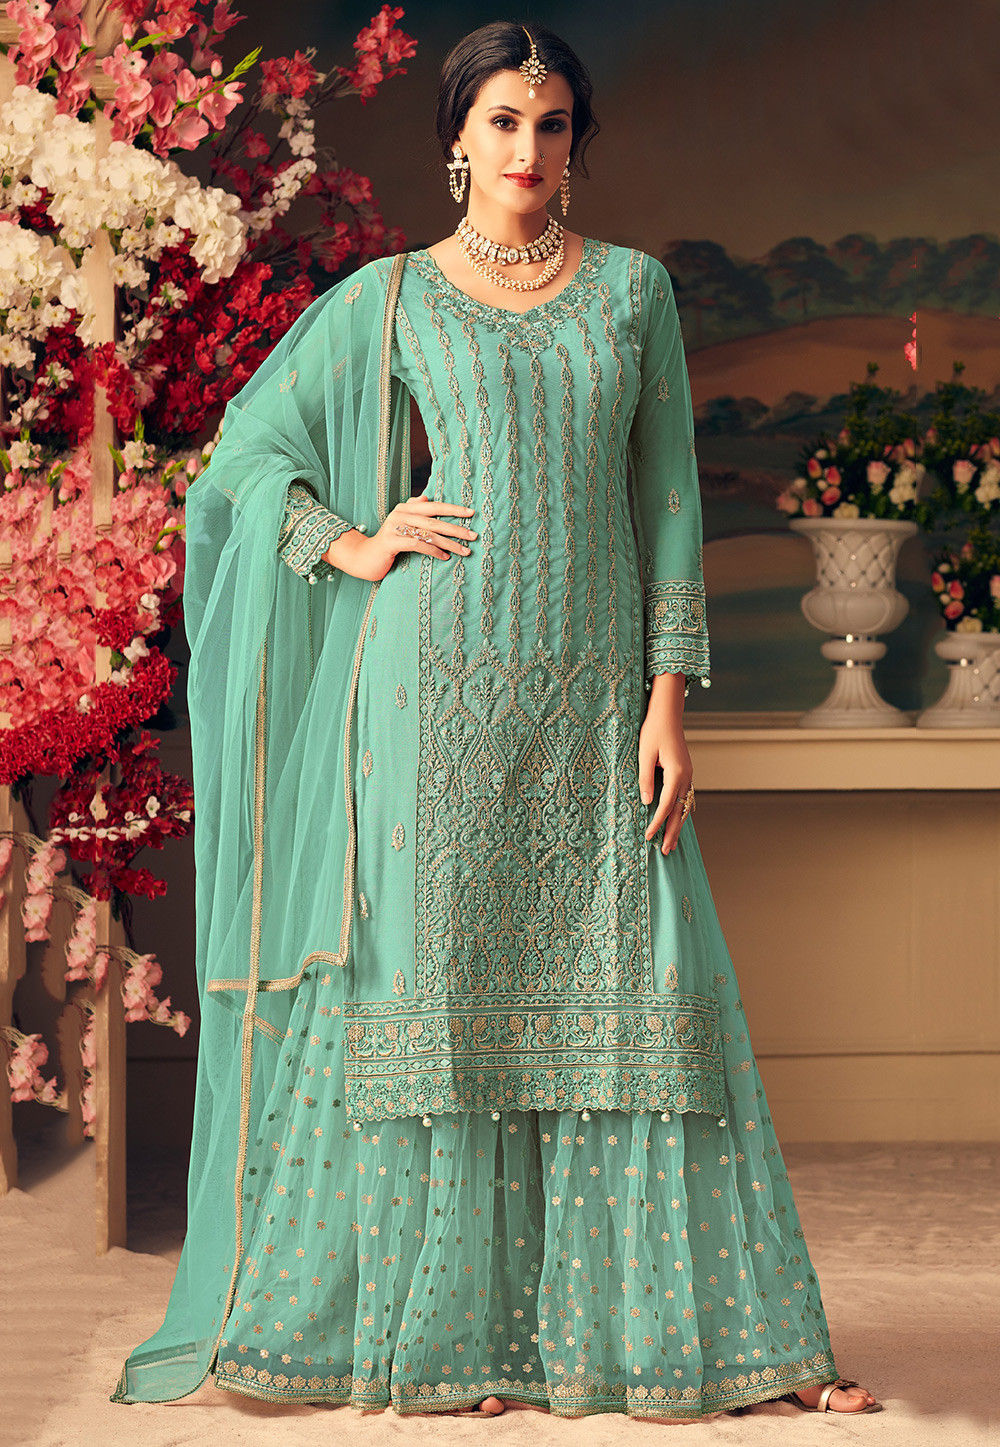 Pakistani Classy Festive Dress In light Sky Blue Color Model# C 1857 | Pakistani  dresses, Pakistani dress design, Pakistani outfits